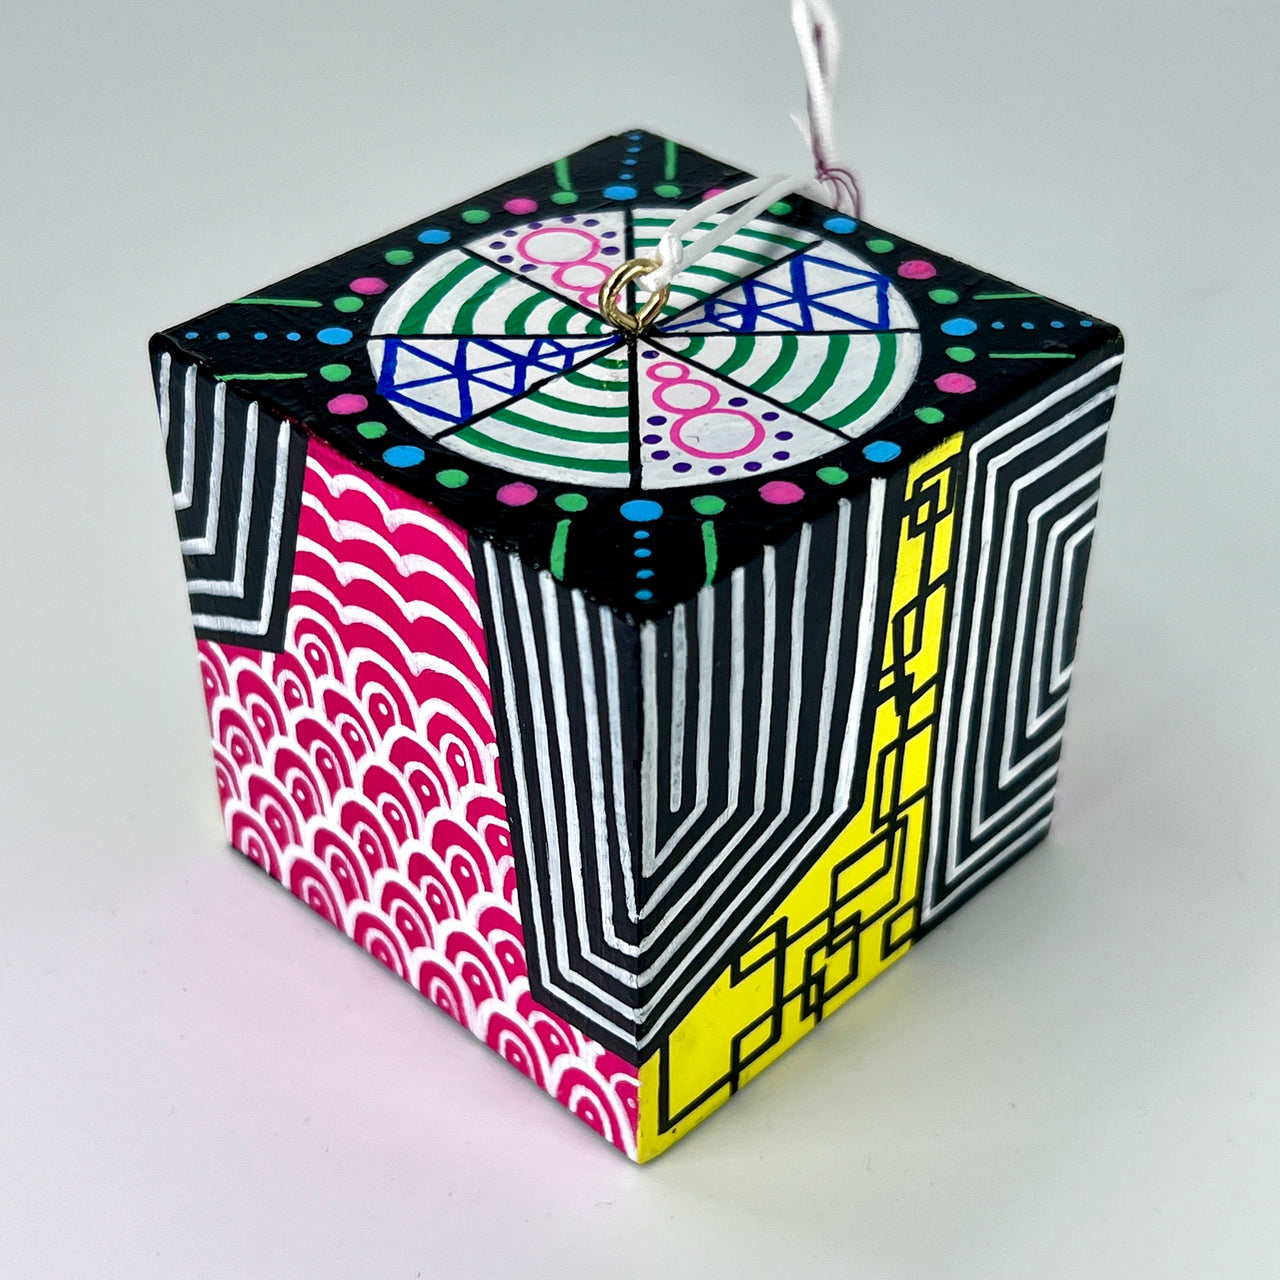 #20 - 3D Cube Art - 2.25" cube